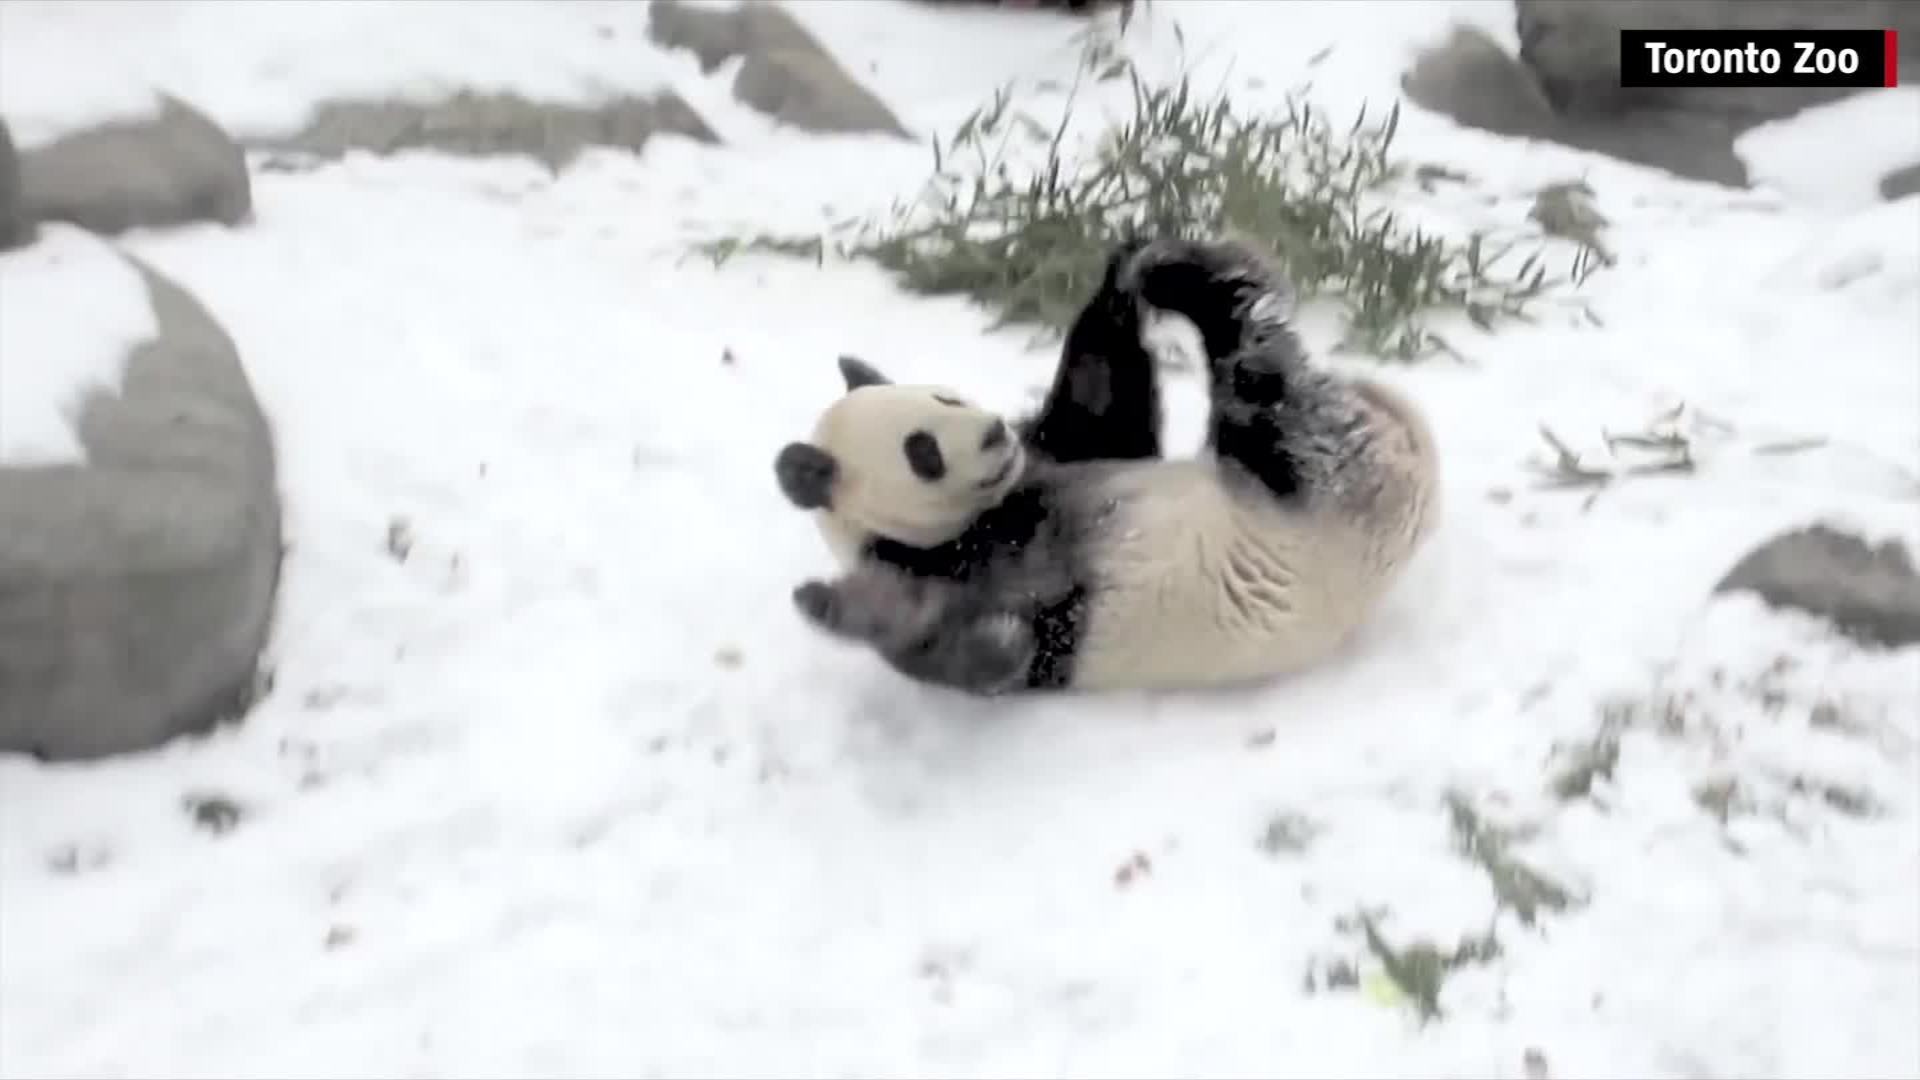 Giant panda takes a tumble in the snow - CNN Video